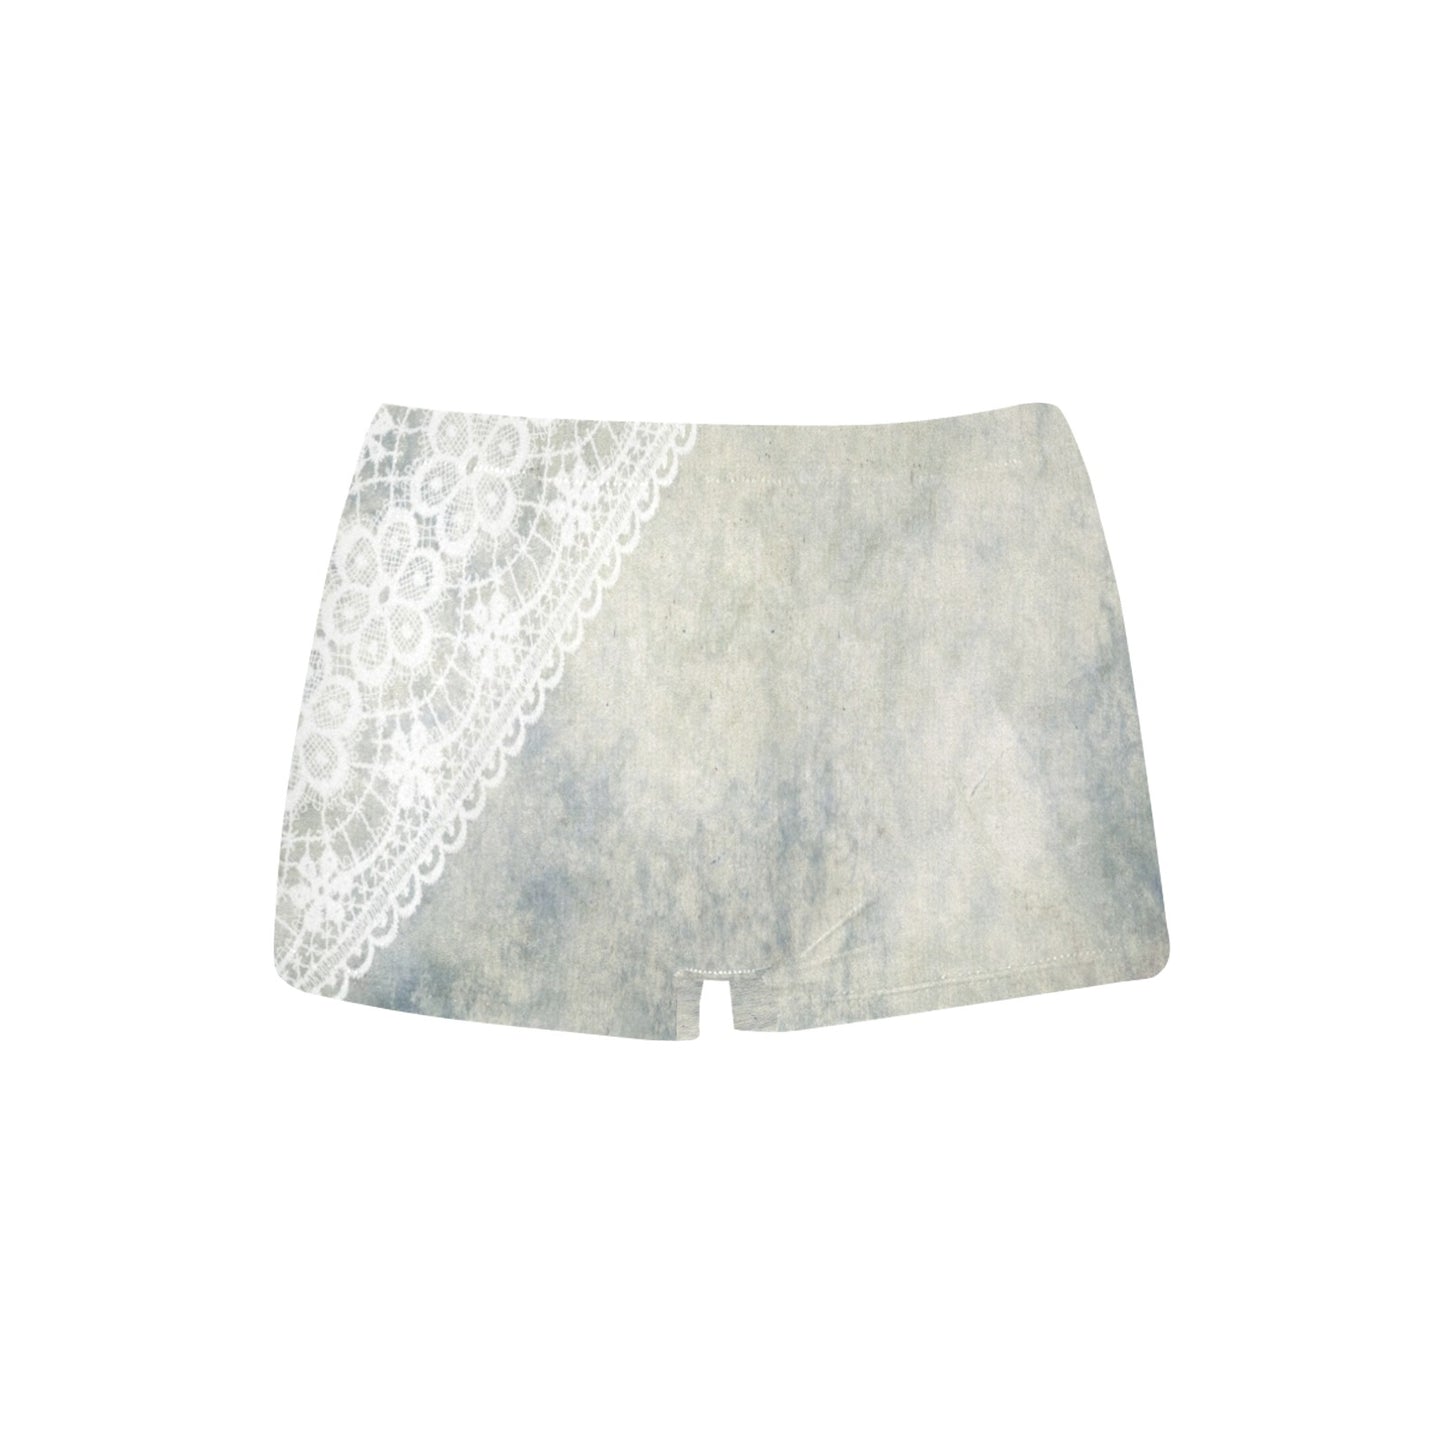 Printed Lace Boyshorts, daisy dukes, pum pum shorts, shortie shorts , design 36